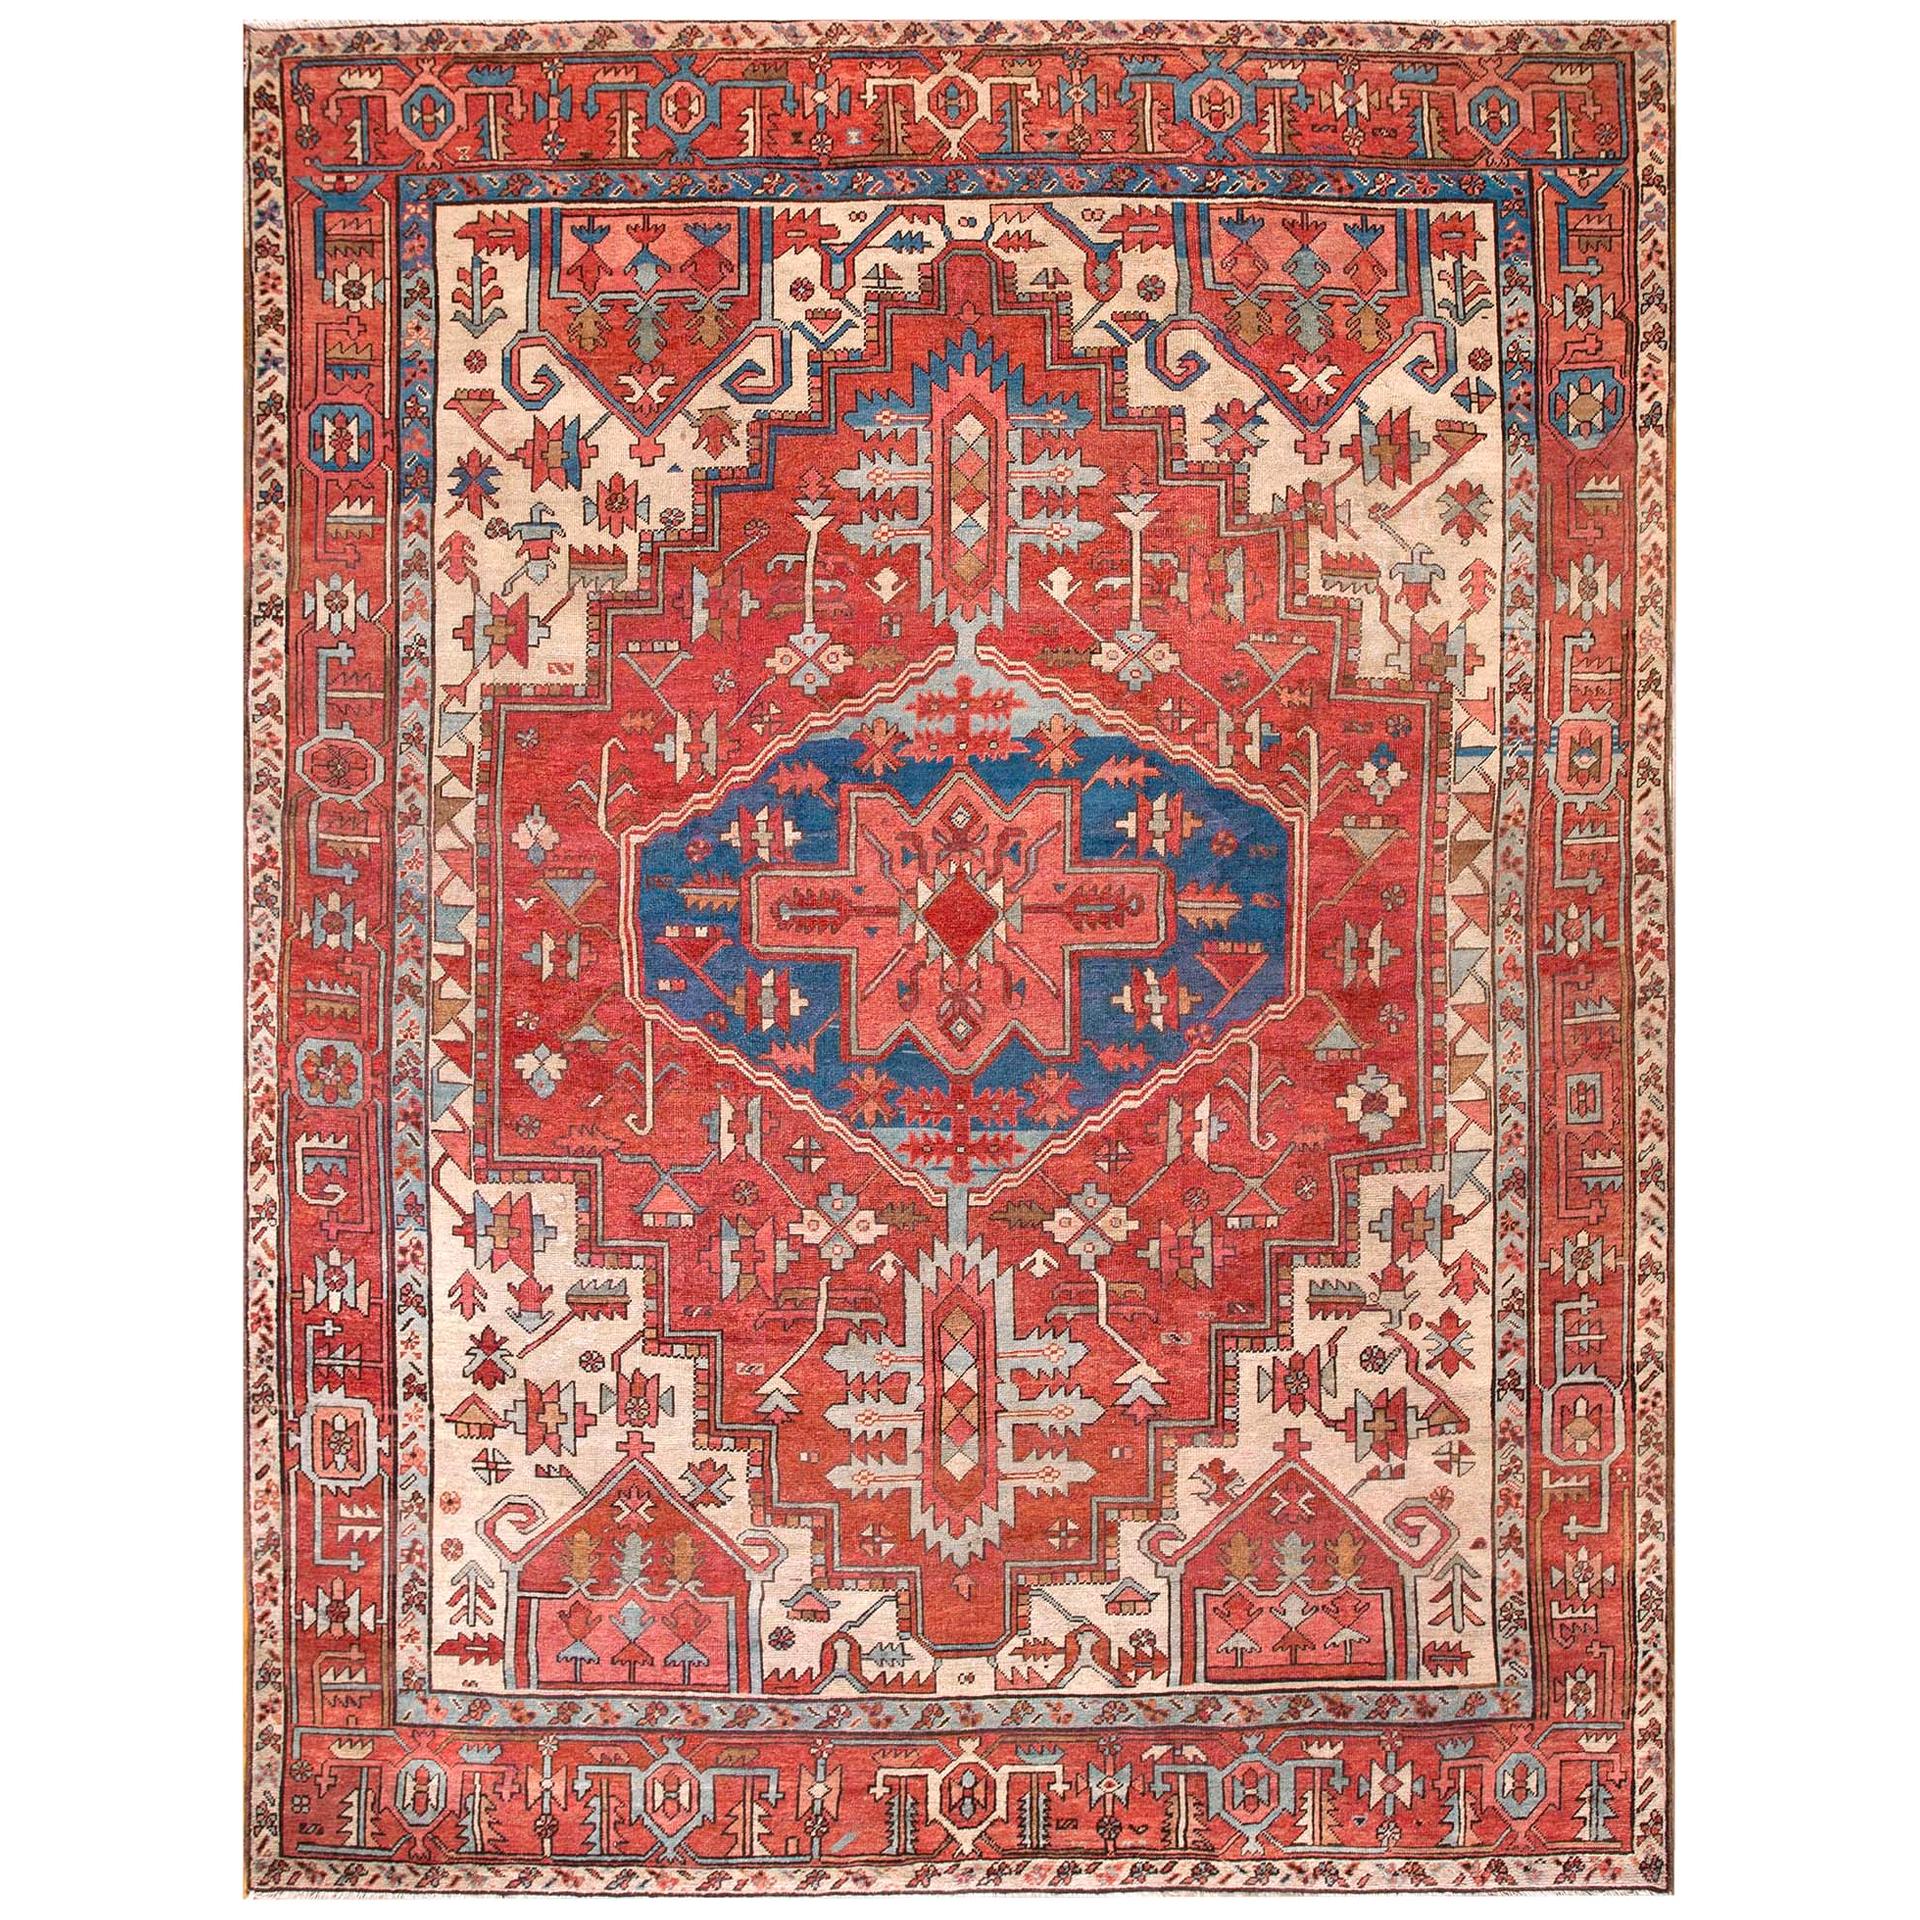 Late 19th Century N.W. Persian Serapi Carpet ( 9'6" x 12'3" - 290 x 373 ) For Sale